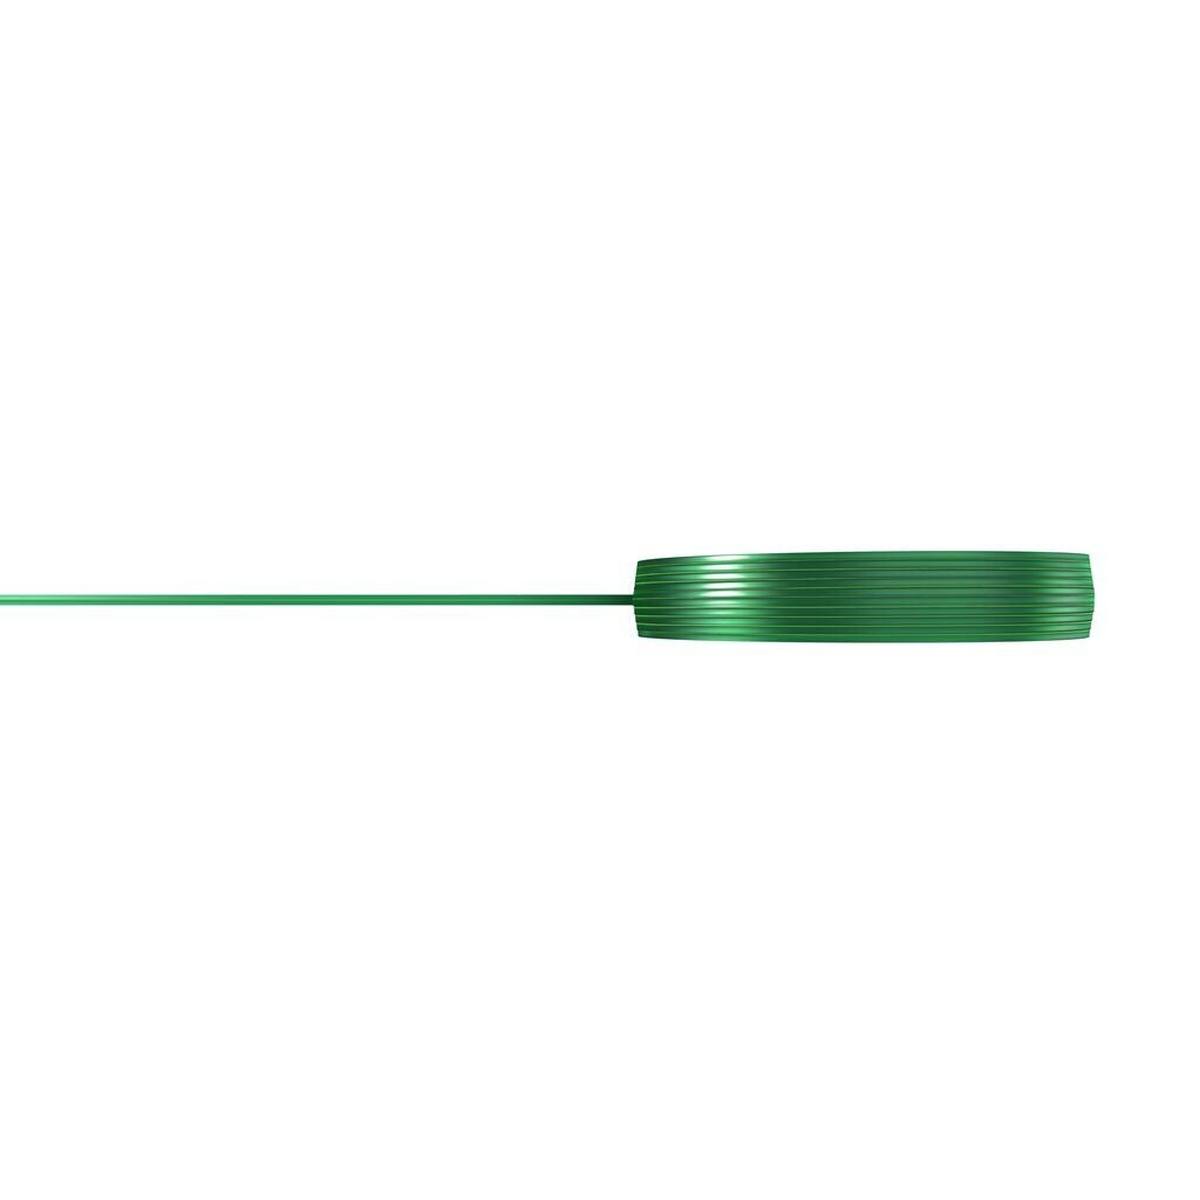  3M Finish Line veitsetön nauha vihreä 3.5mm x10m